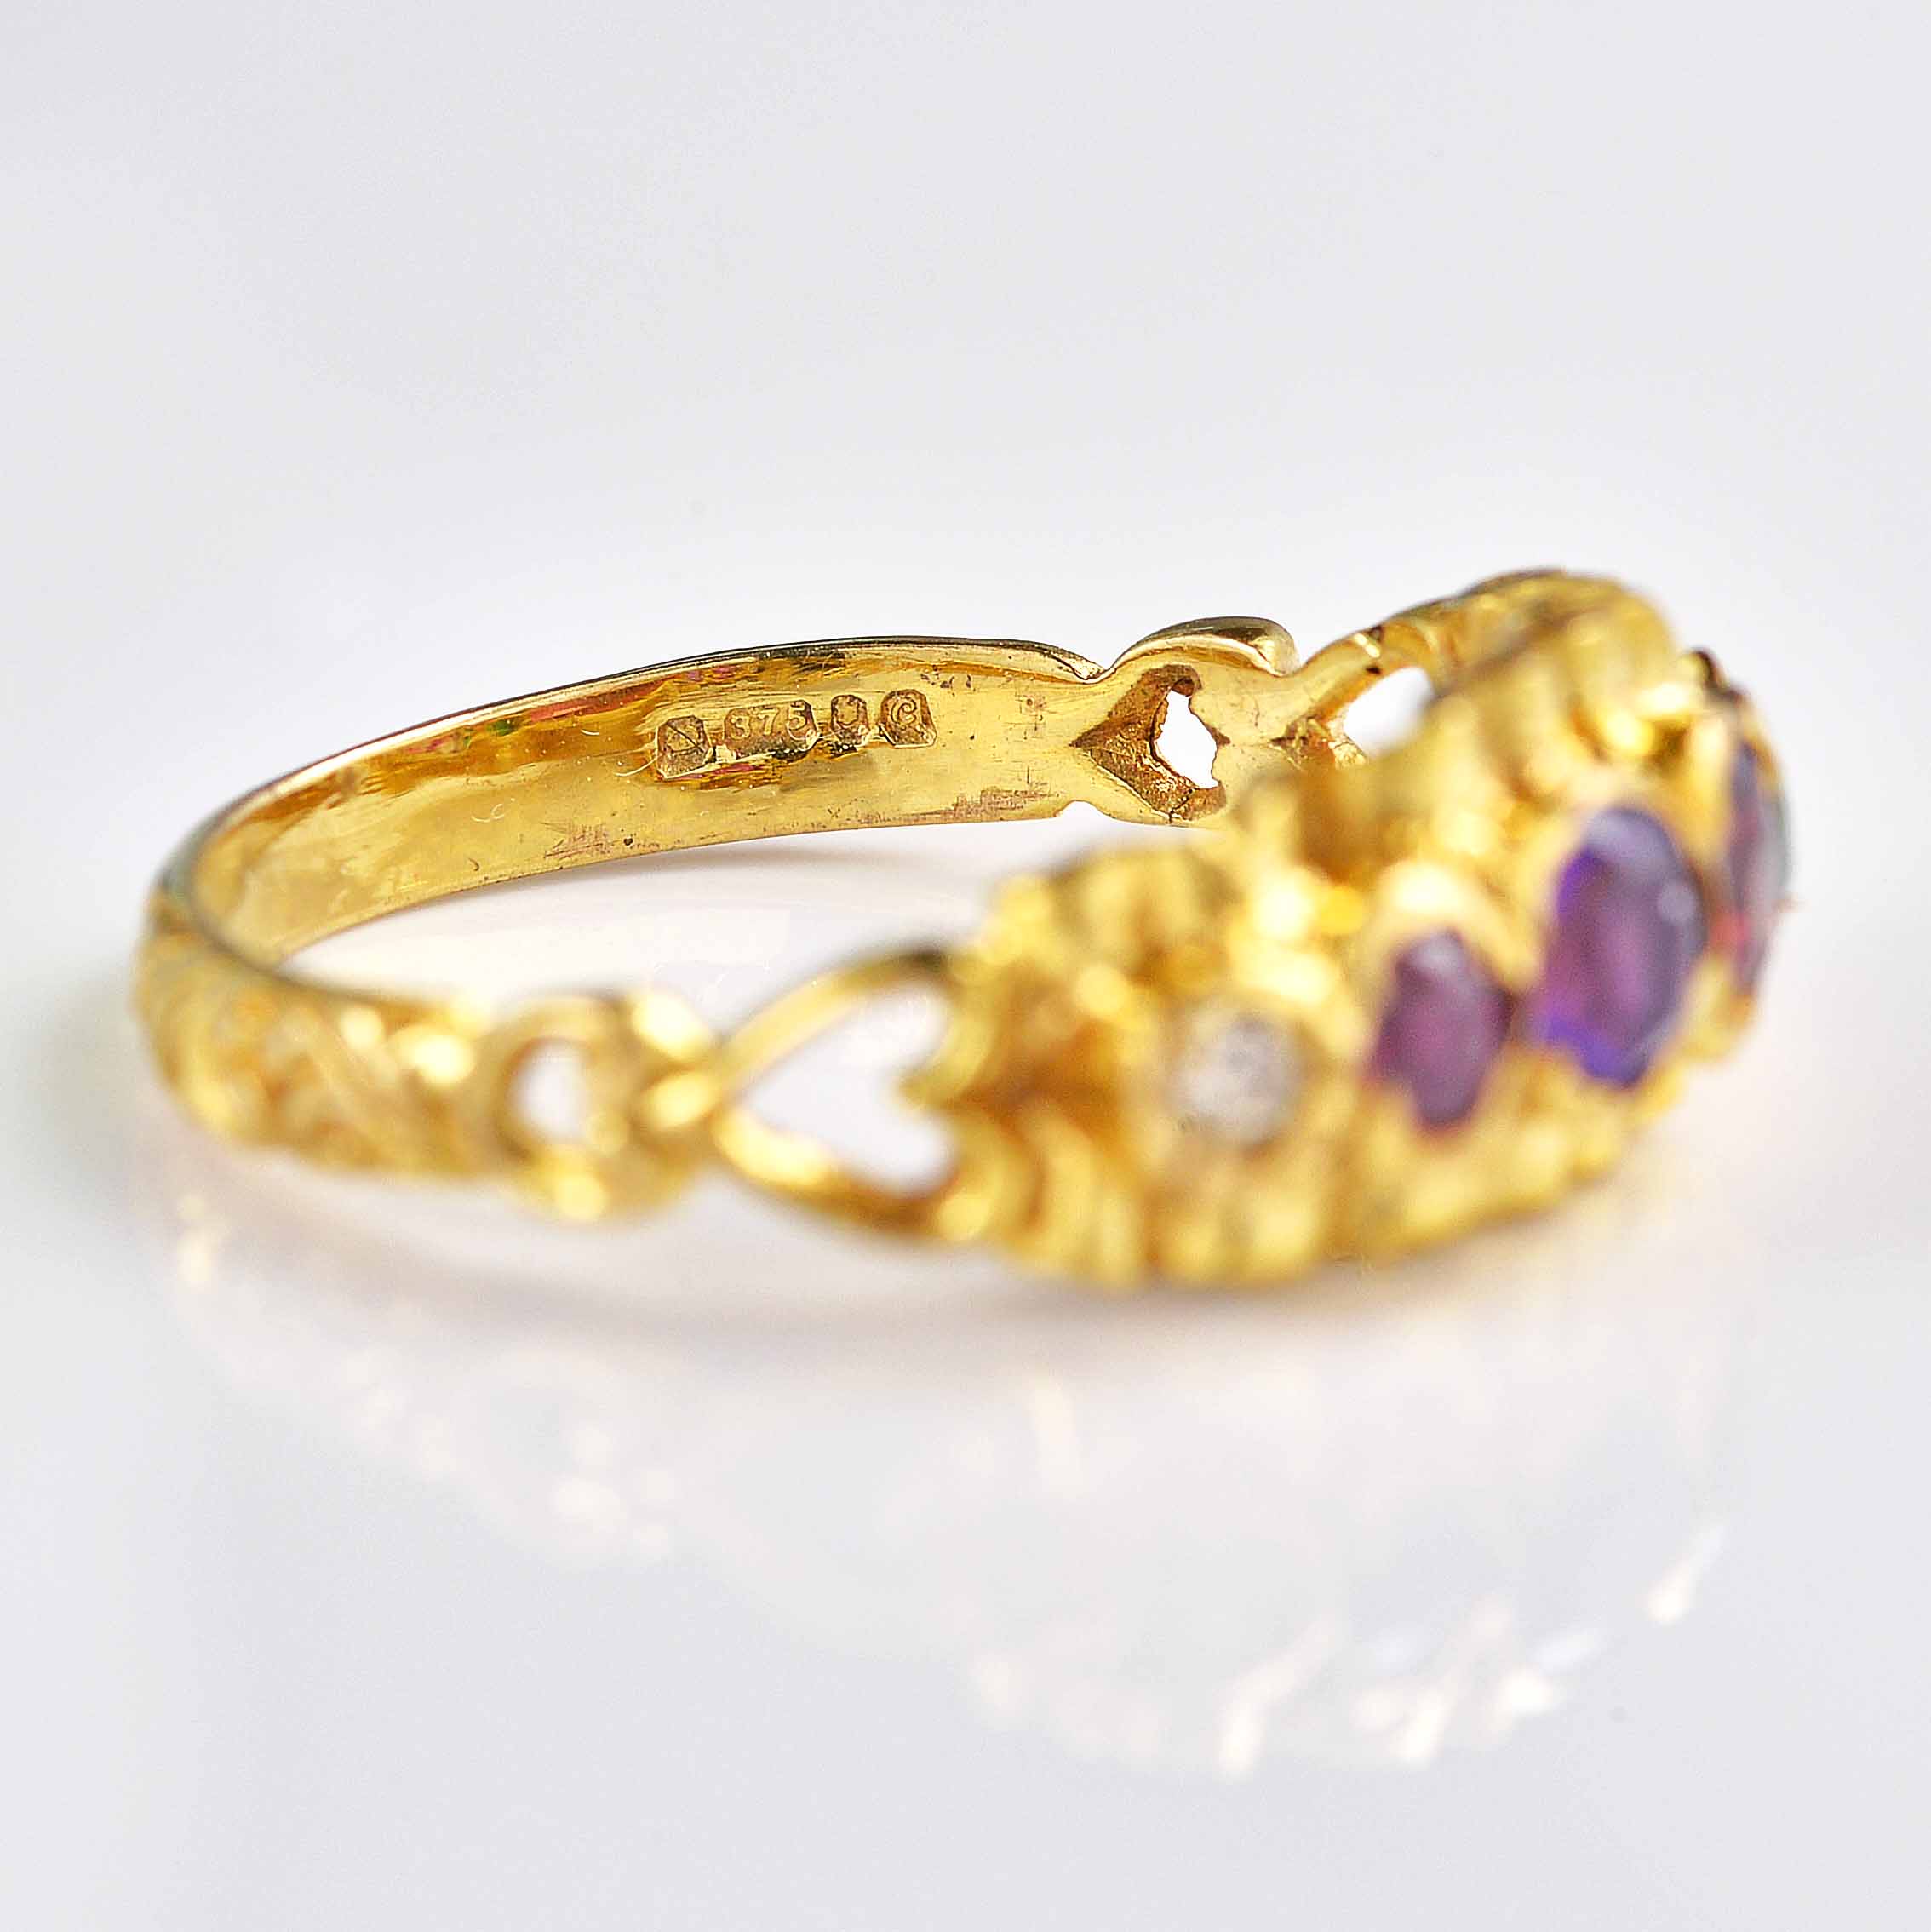 Ellibelle Jewellery Antique Style Vintage 1977 "REGARD" 9ct Gold Acrostic Ring